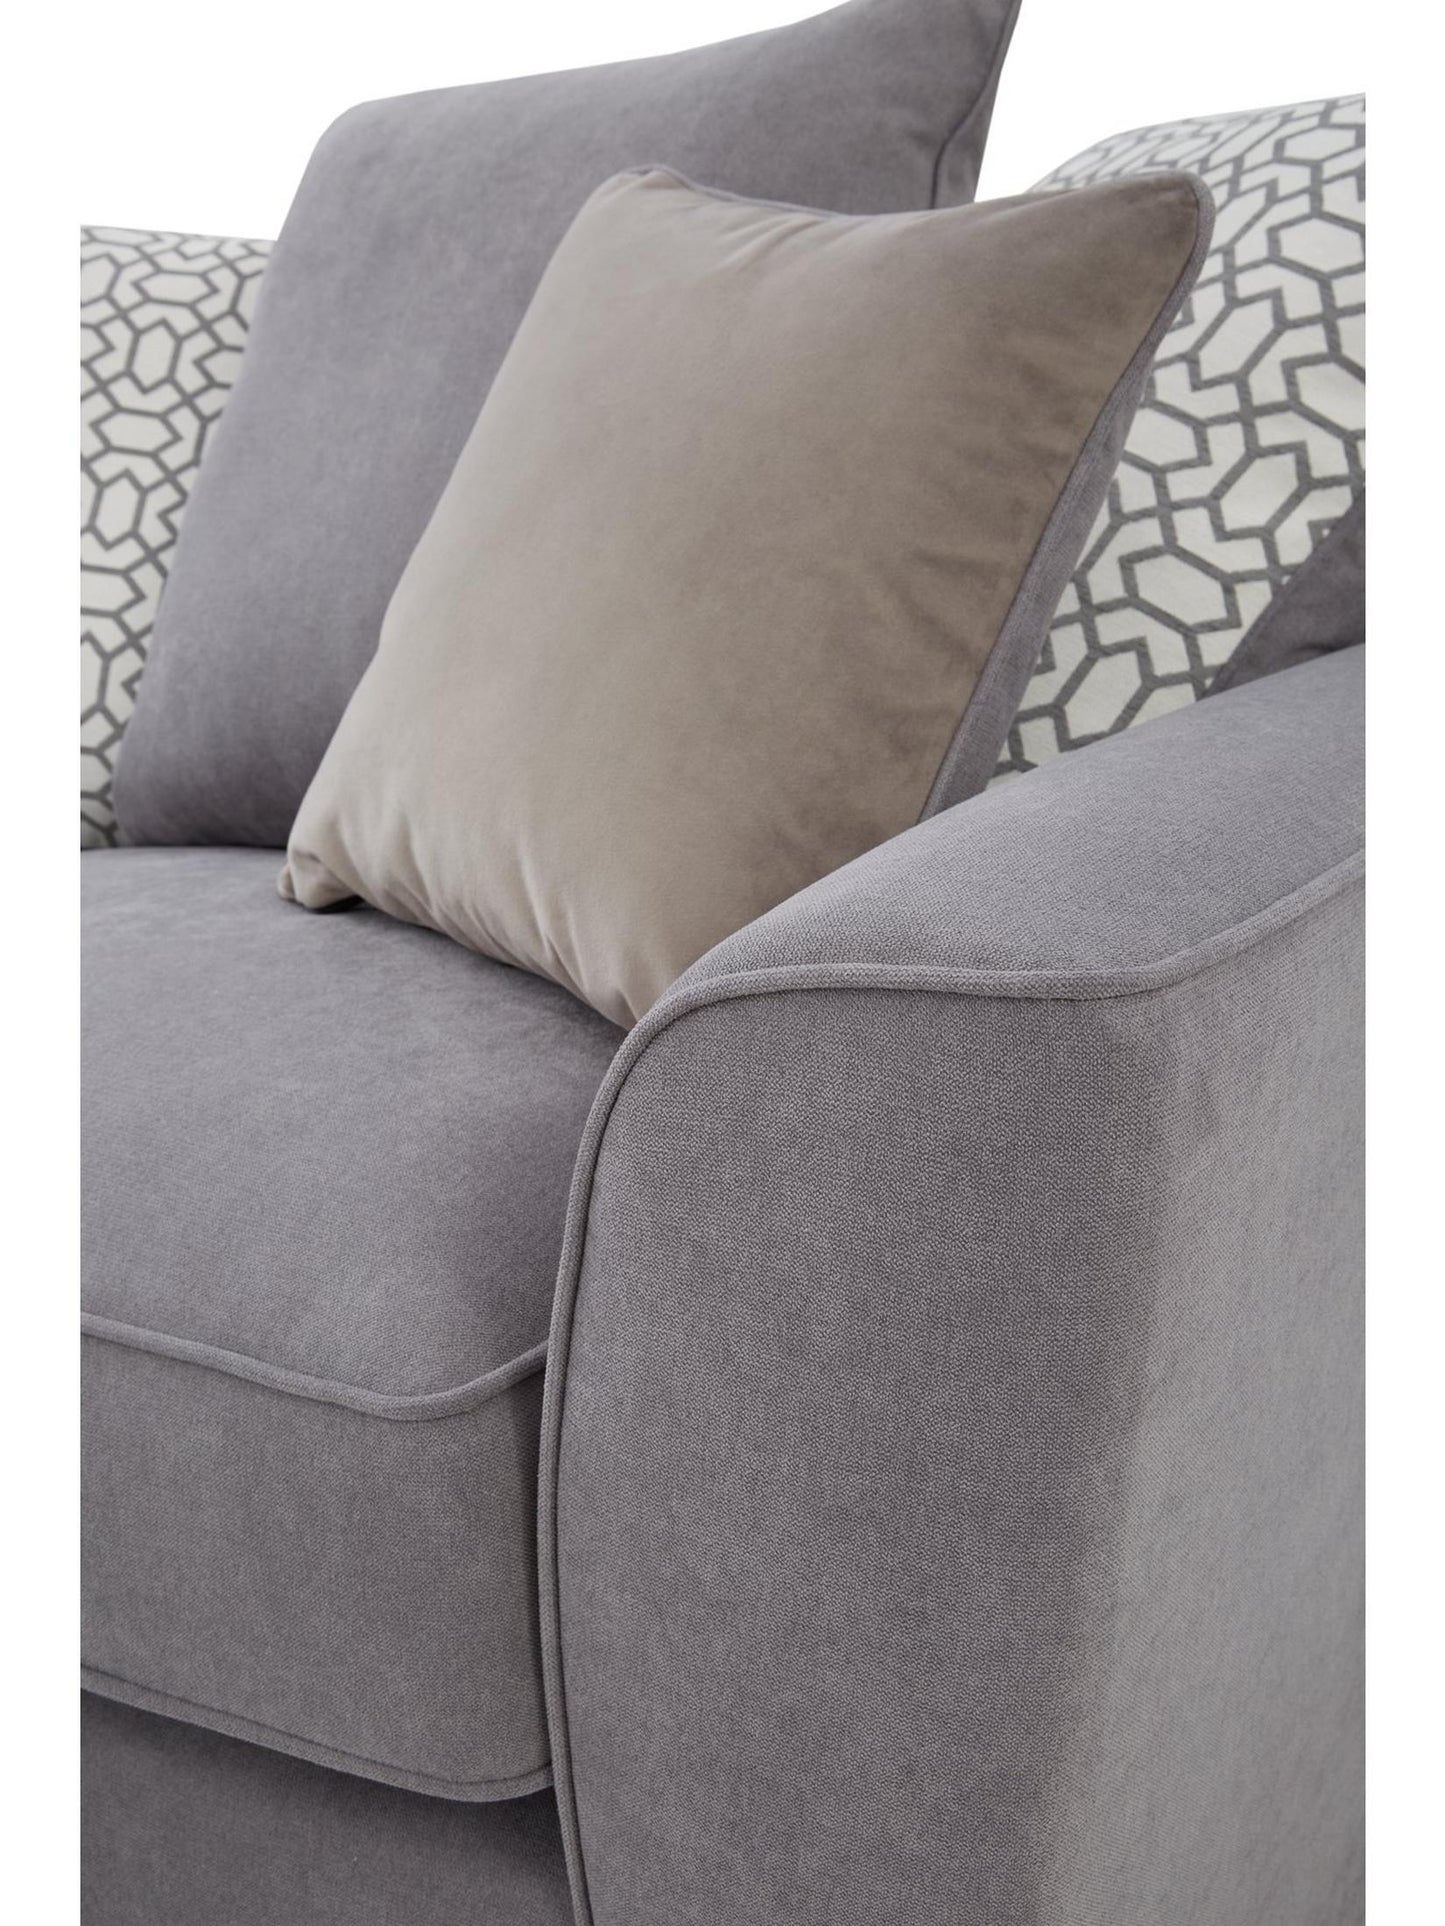 Fantasy (L2, R2C) Right Hand Facing Pillow Back Corner Sofa